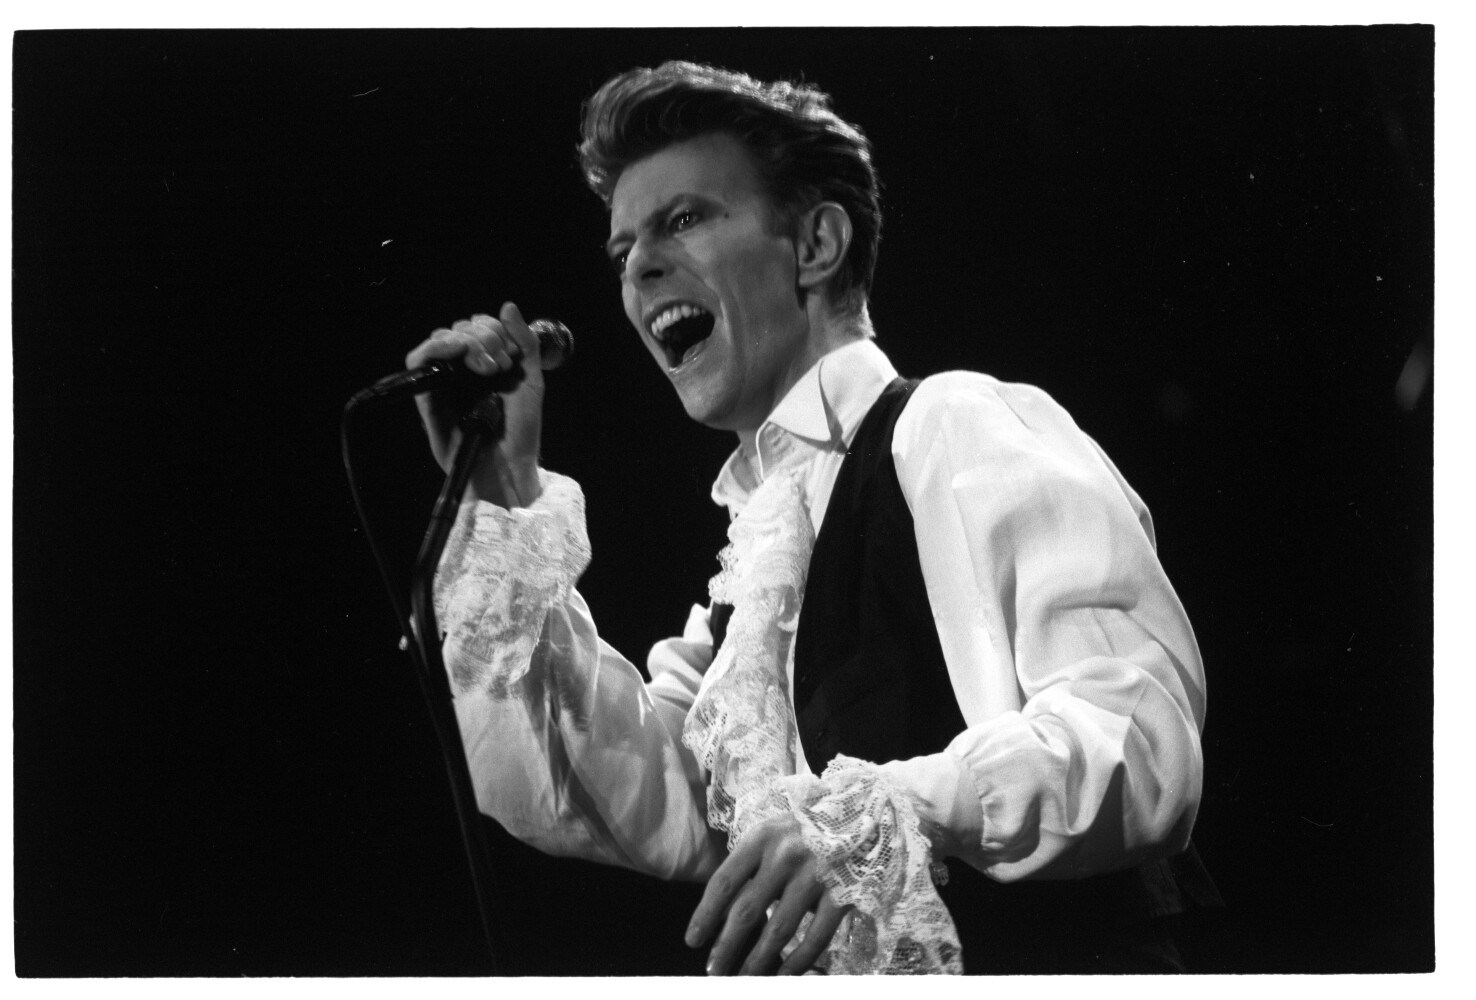 David Bowie 31.8.1990 I N3 (Rita Maier / Schwules Museum Berlin RR-P)